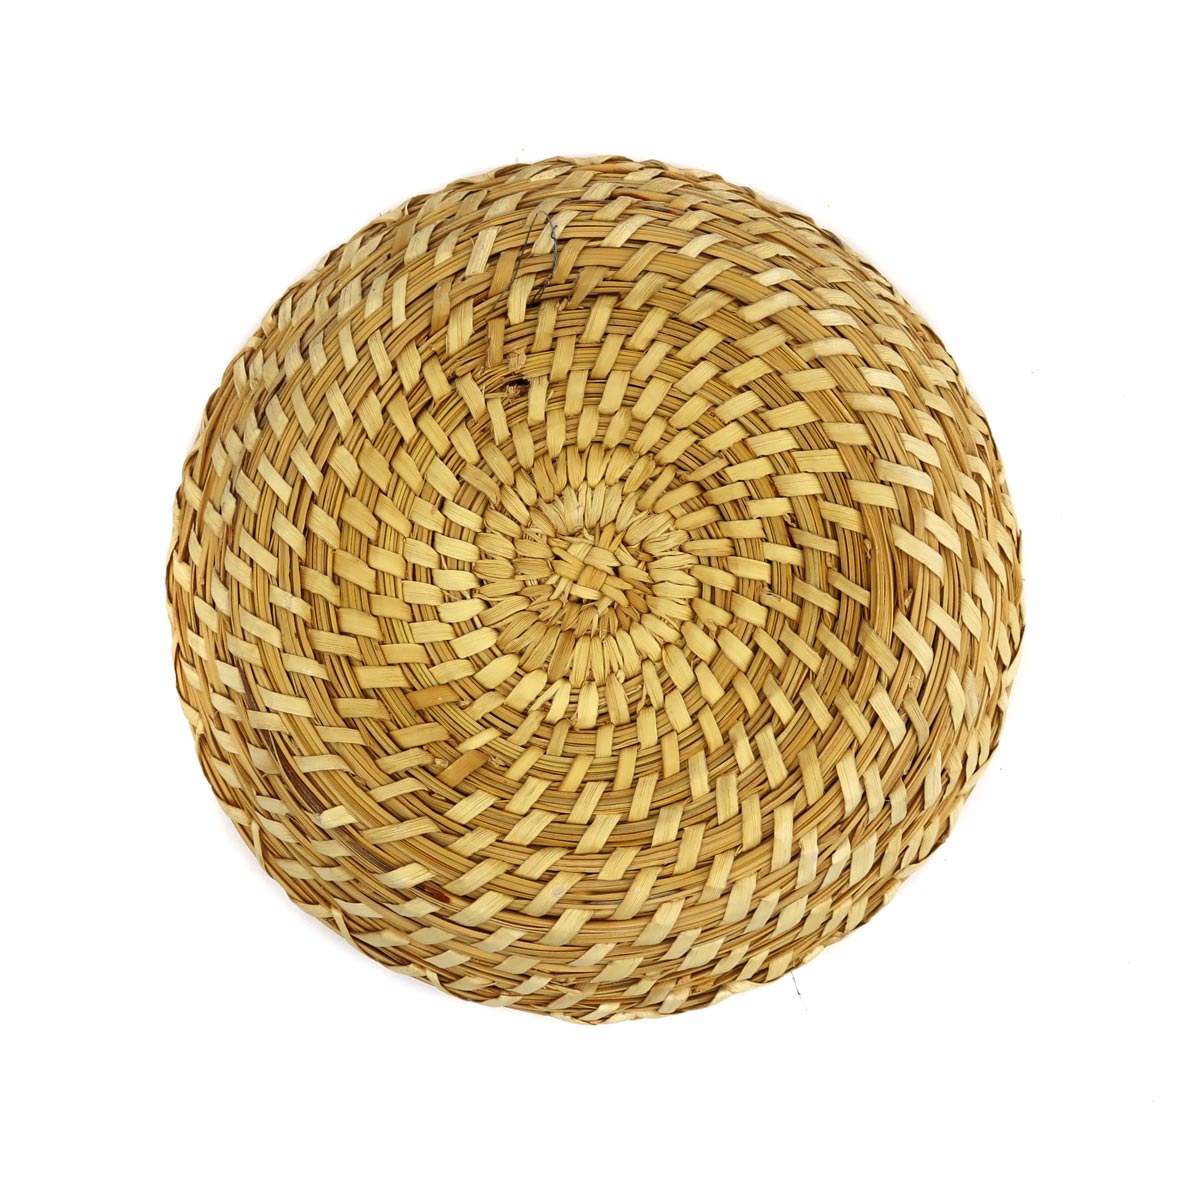 Tohono O'odham Gap Stitch Basket c. 1970-80s, 7.25" diameter (SK3353) 1